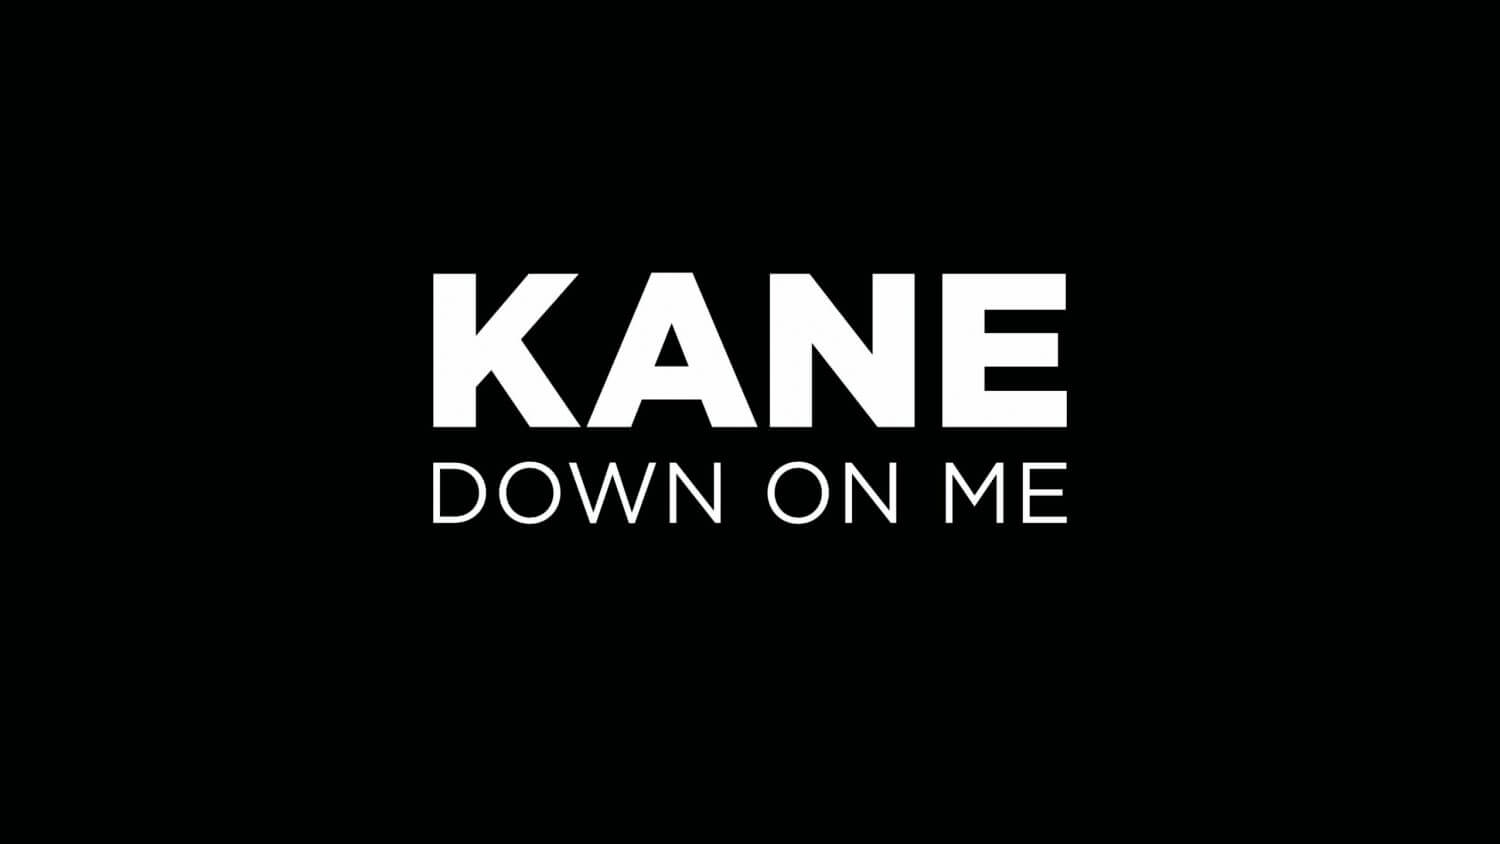 Kane Down On Me